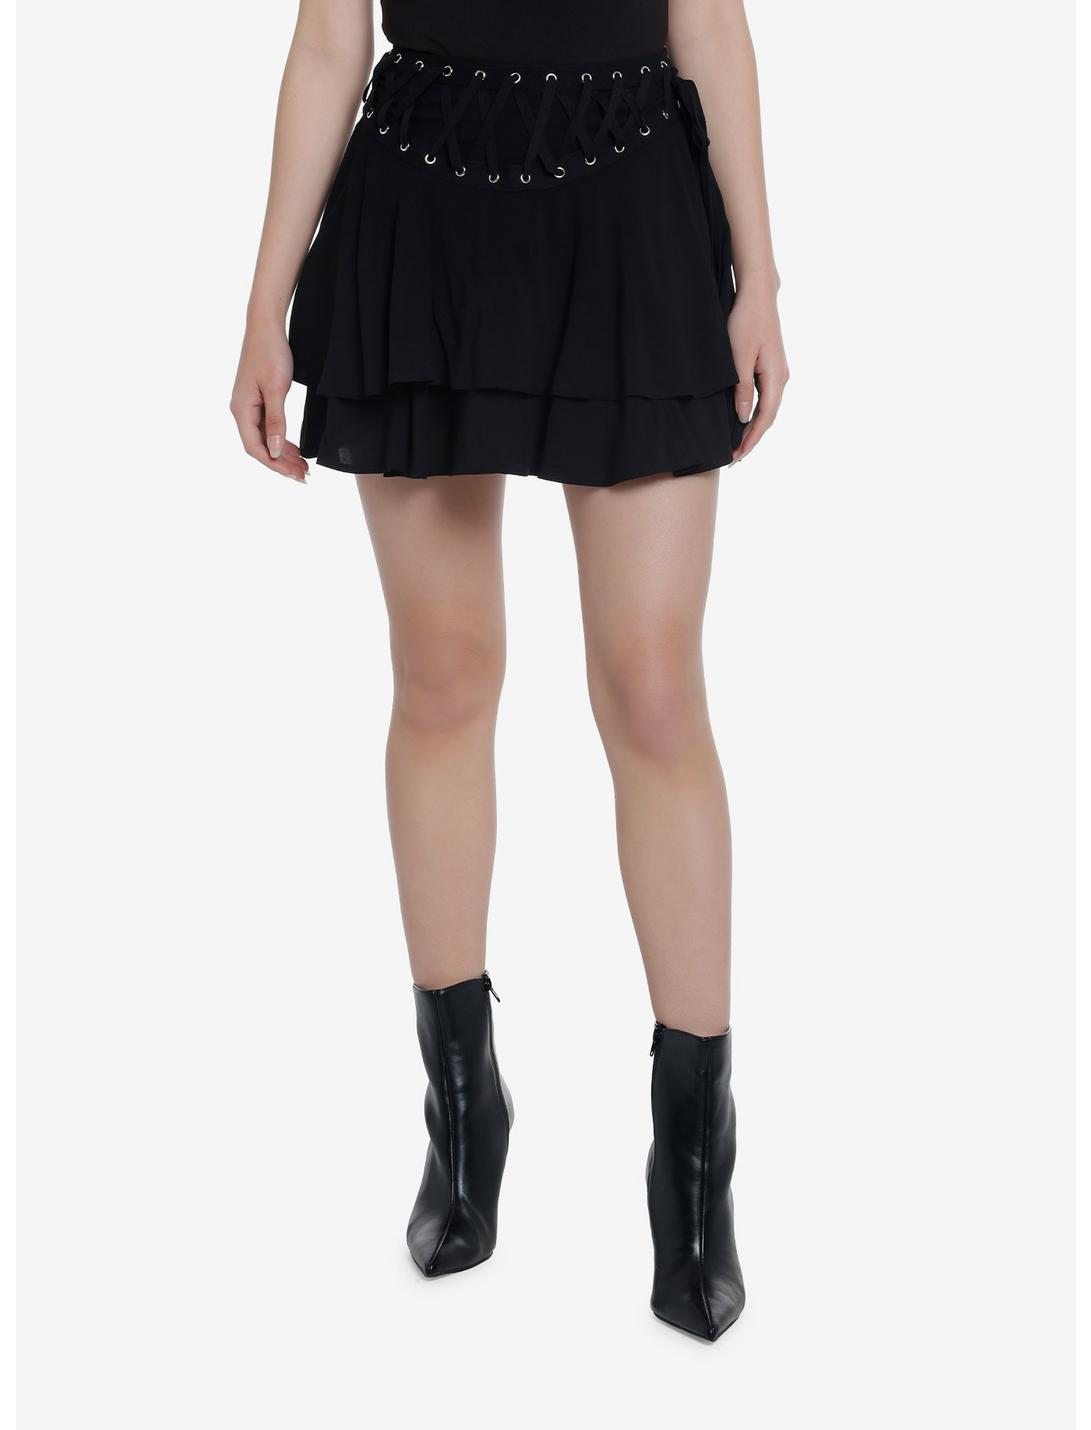 Cosmic Aura Black Grommet & Lace-Up Tiered Skirt, BLACK, hi-res